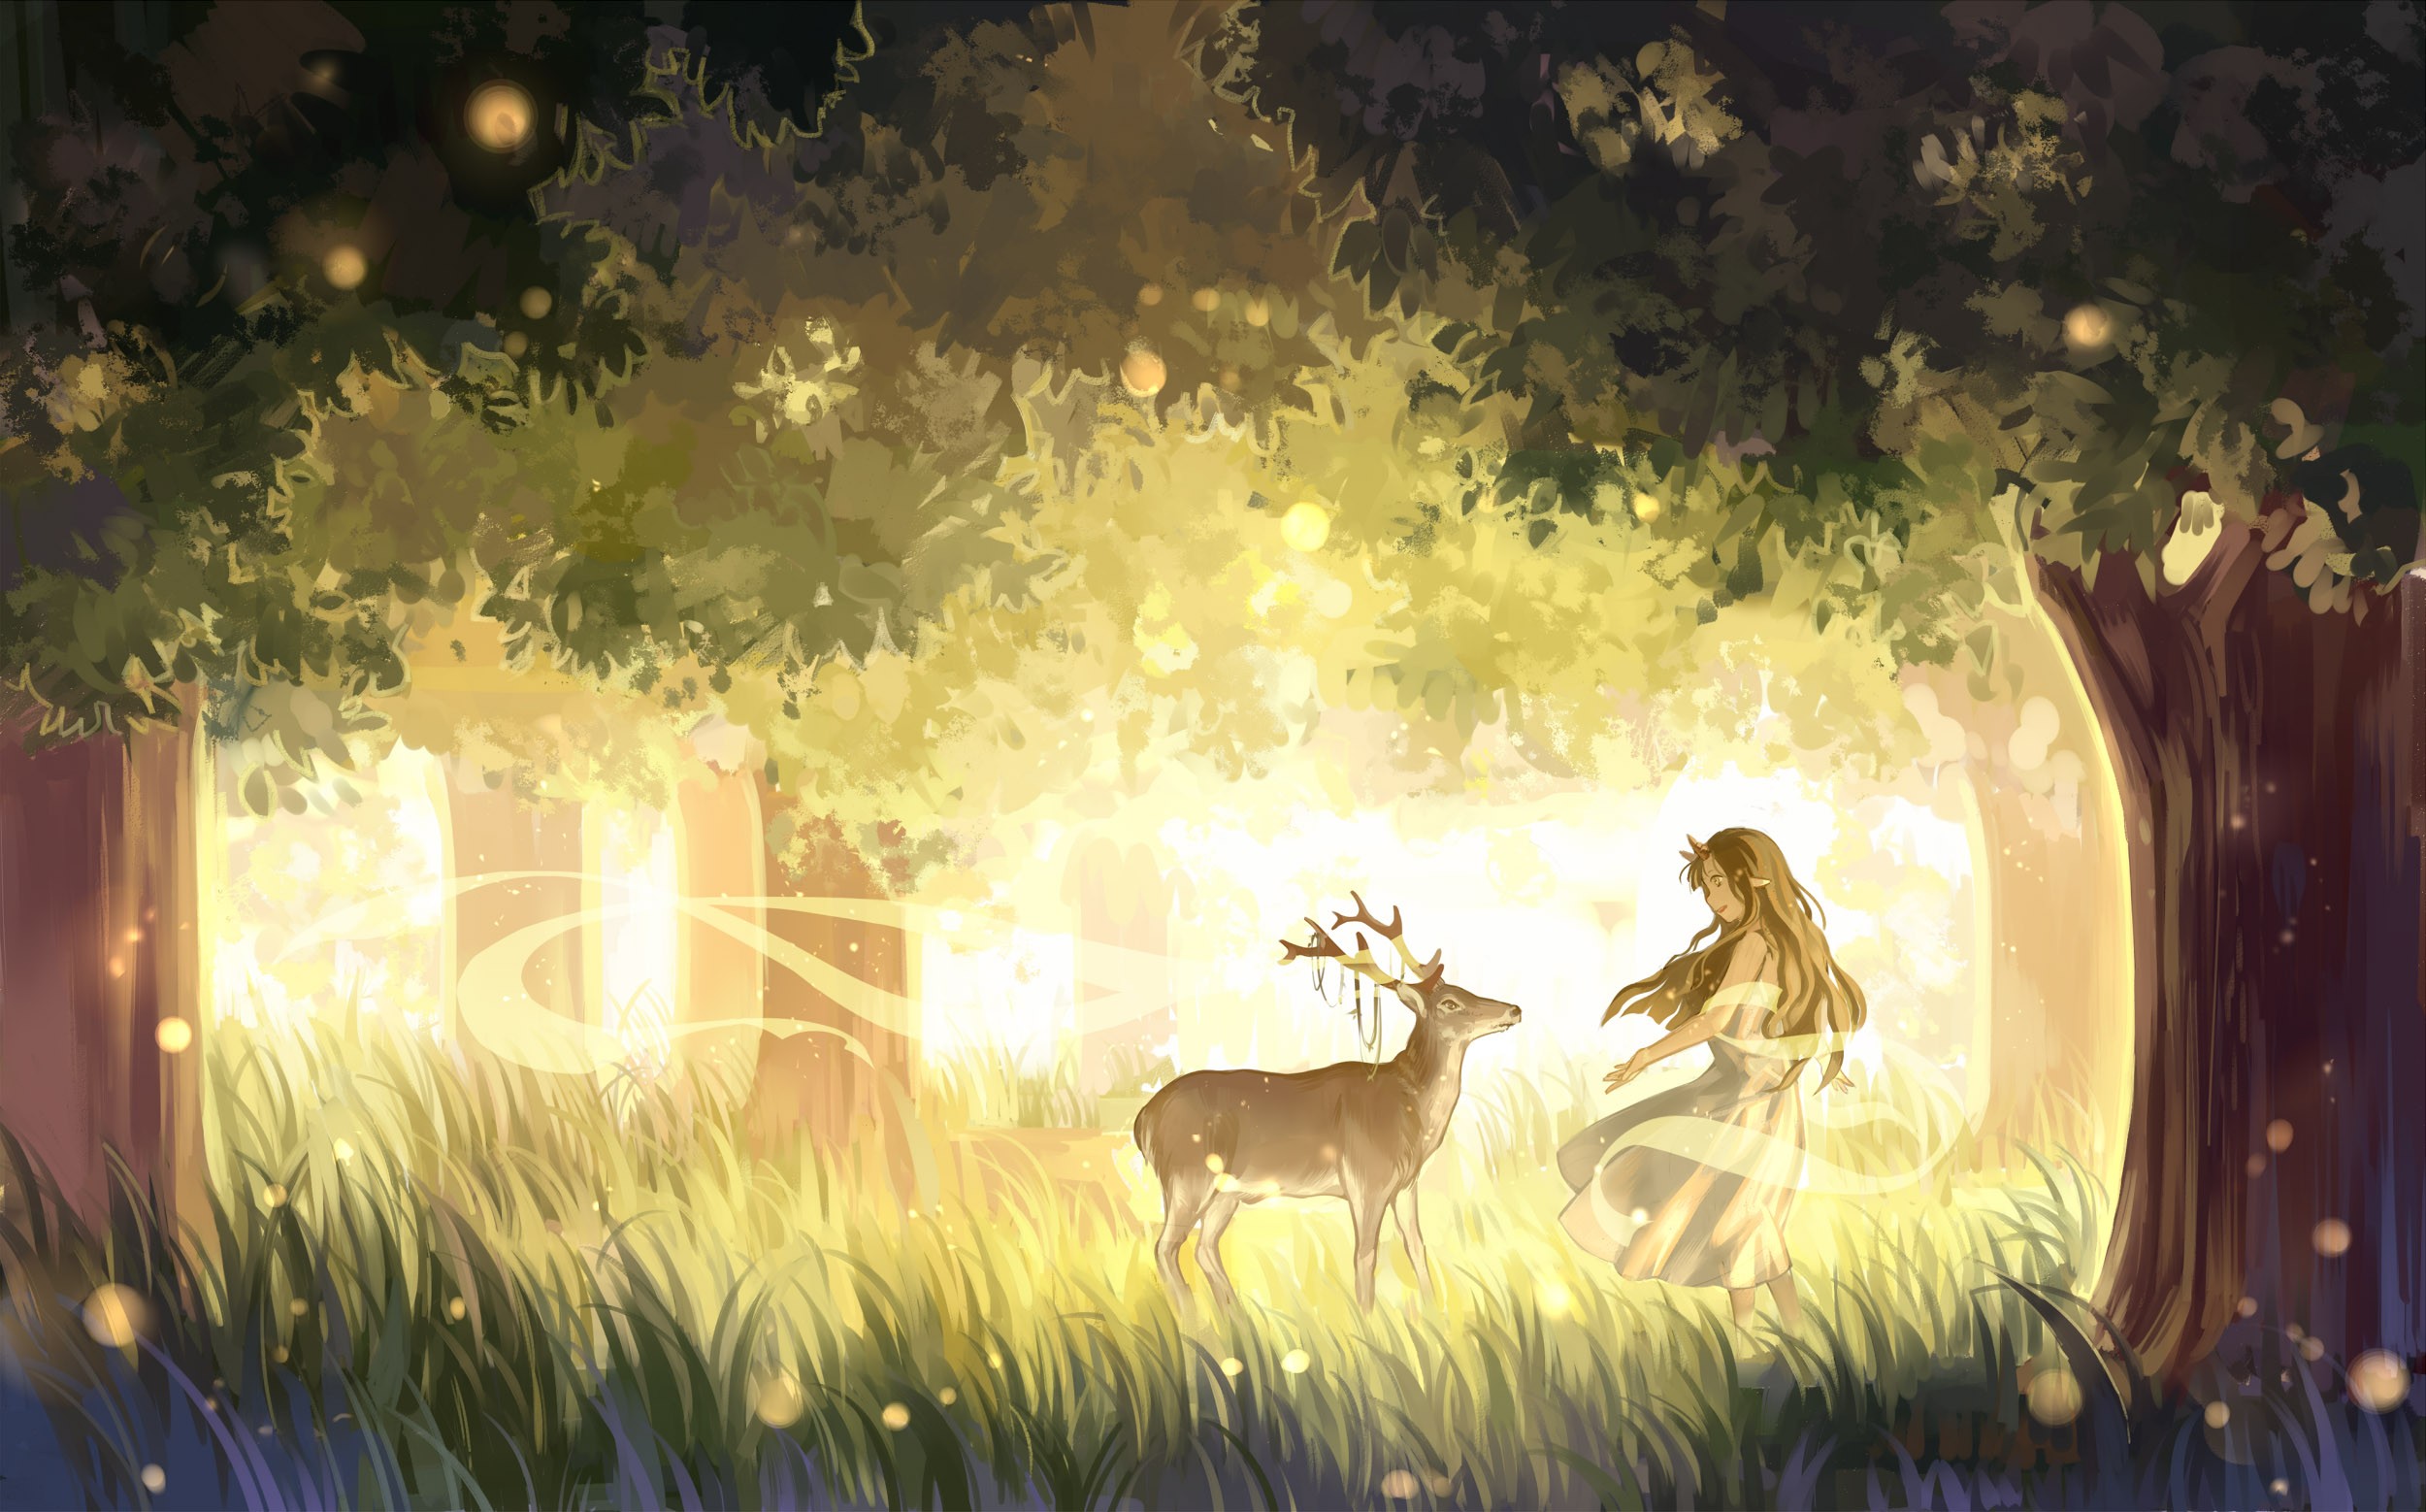 Anime 2500x1558 artwork nature fantasy art anime animals mammals deer trees outdoors sunlight